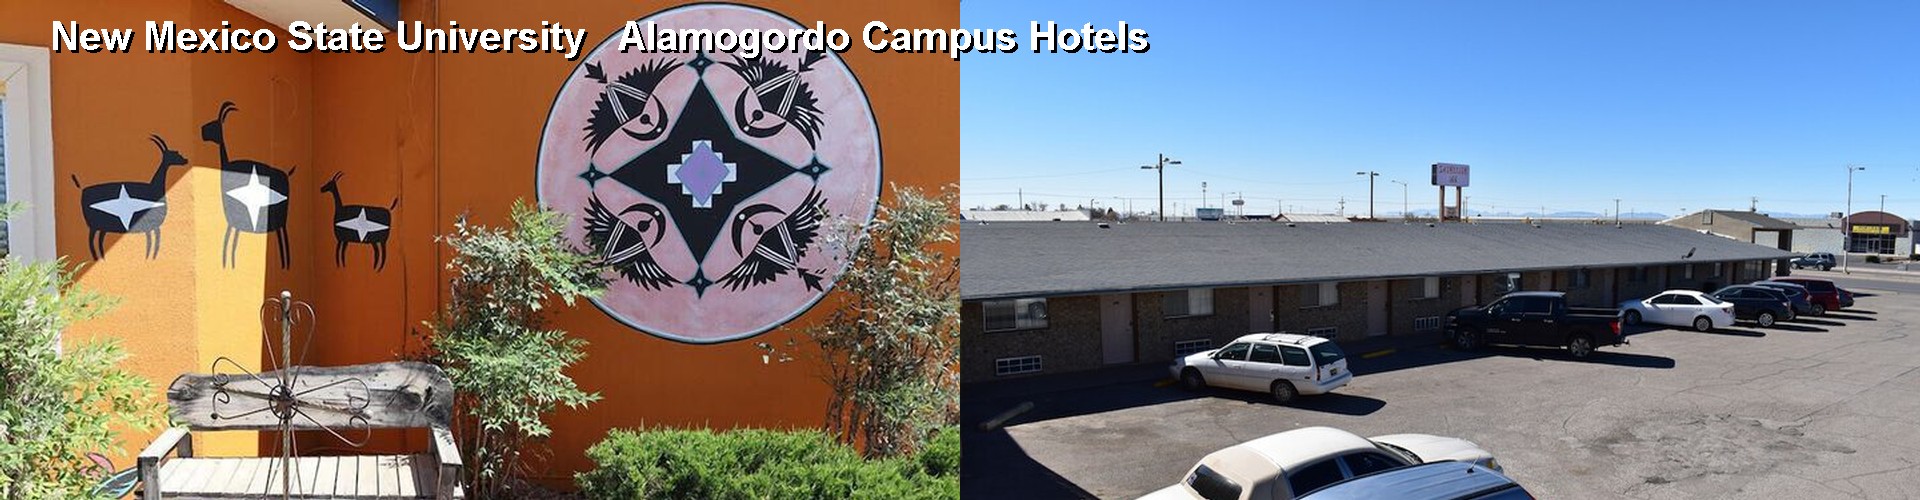 5 Best Hotels near New Mexico State University   Alamogordo Campus